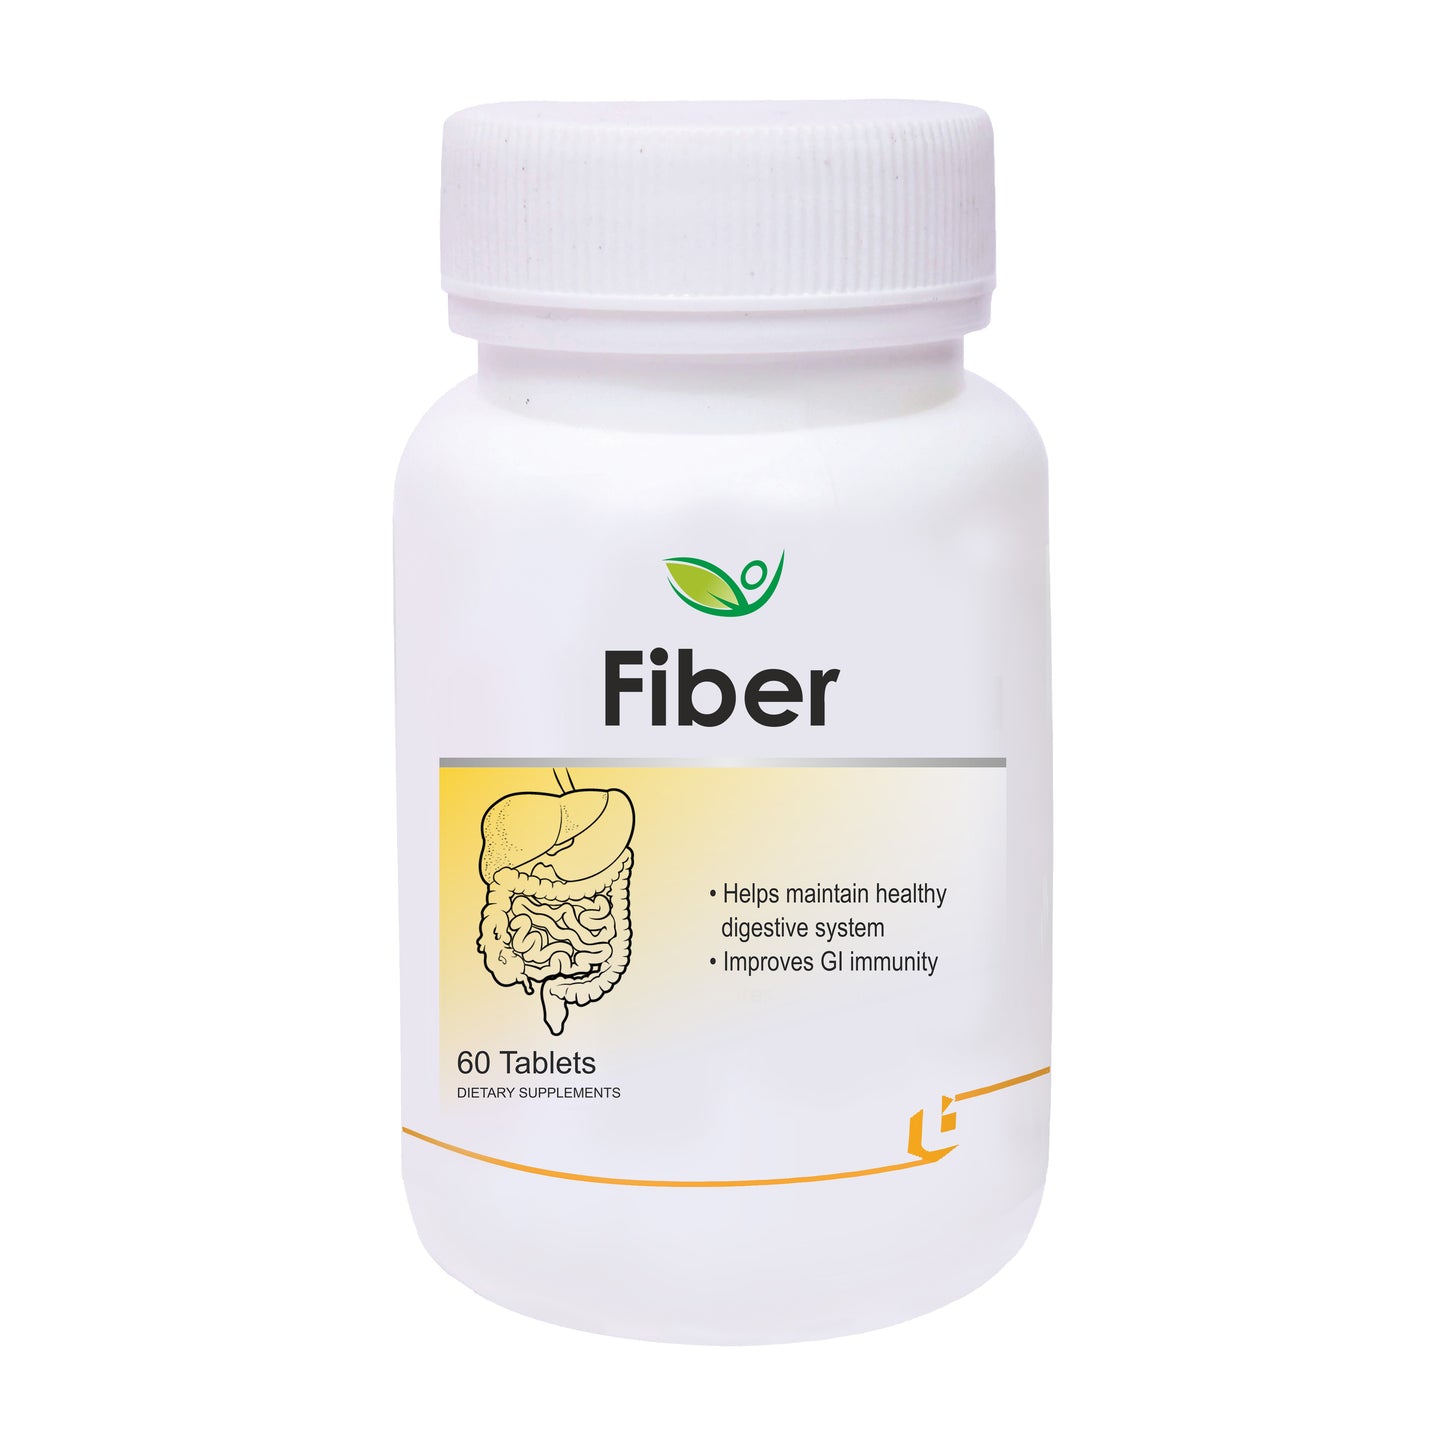 Biotrex Fiber Supplement - 60 Tablets